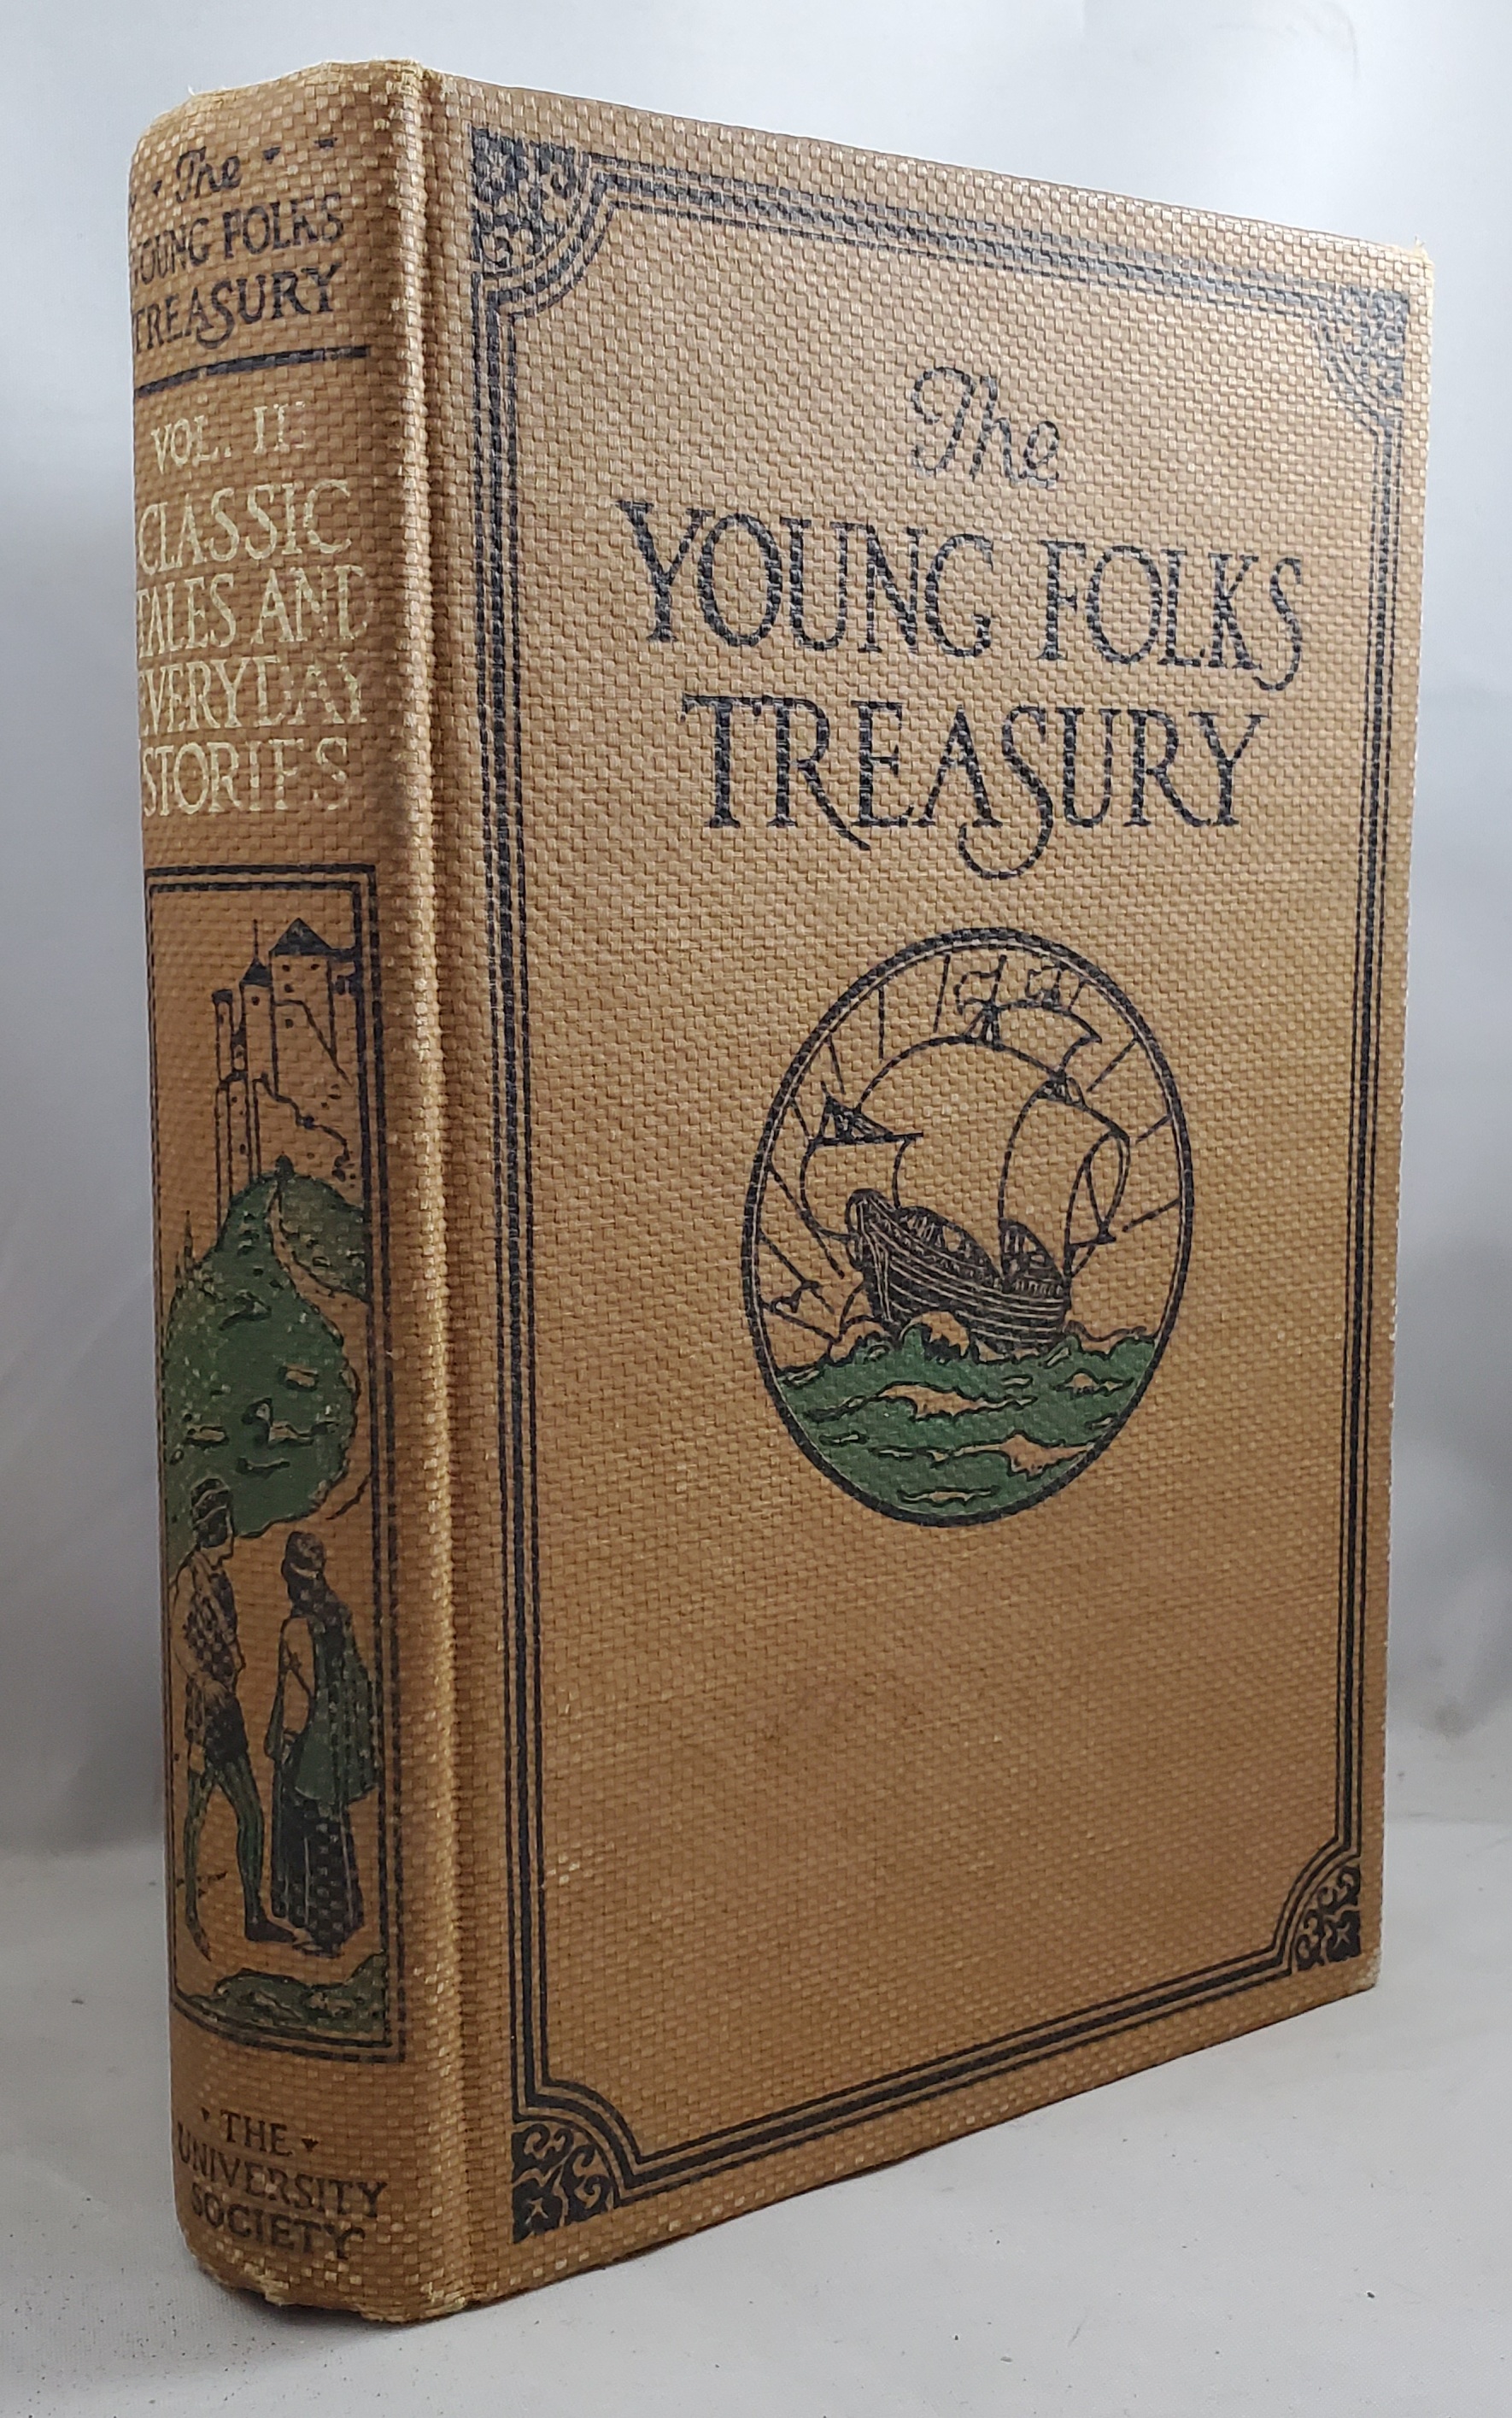 young folks treasury